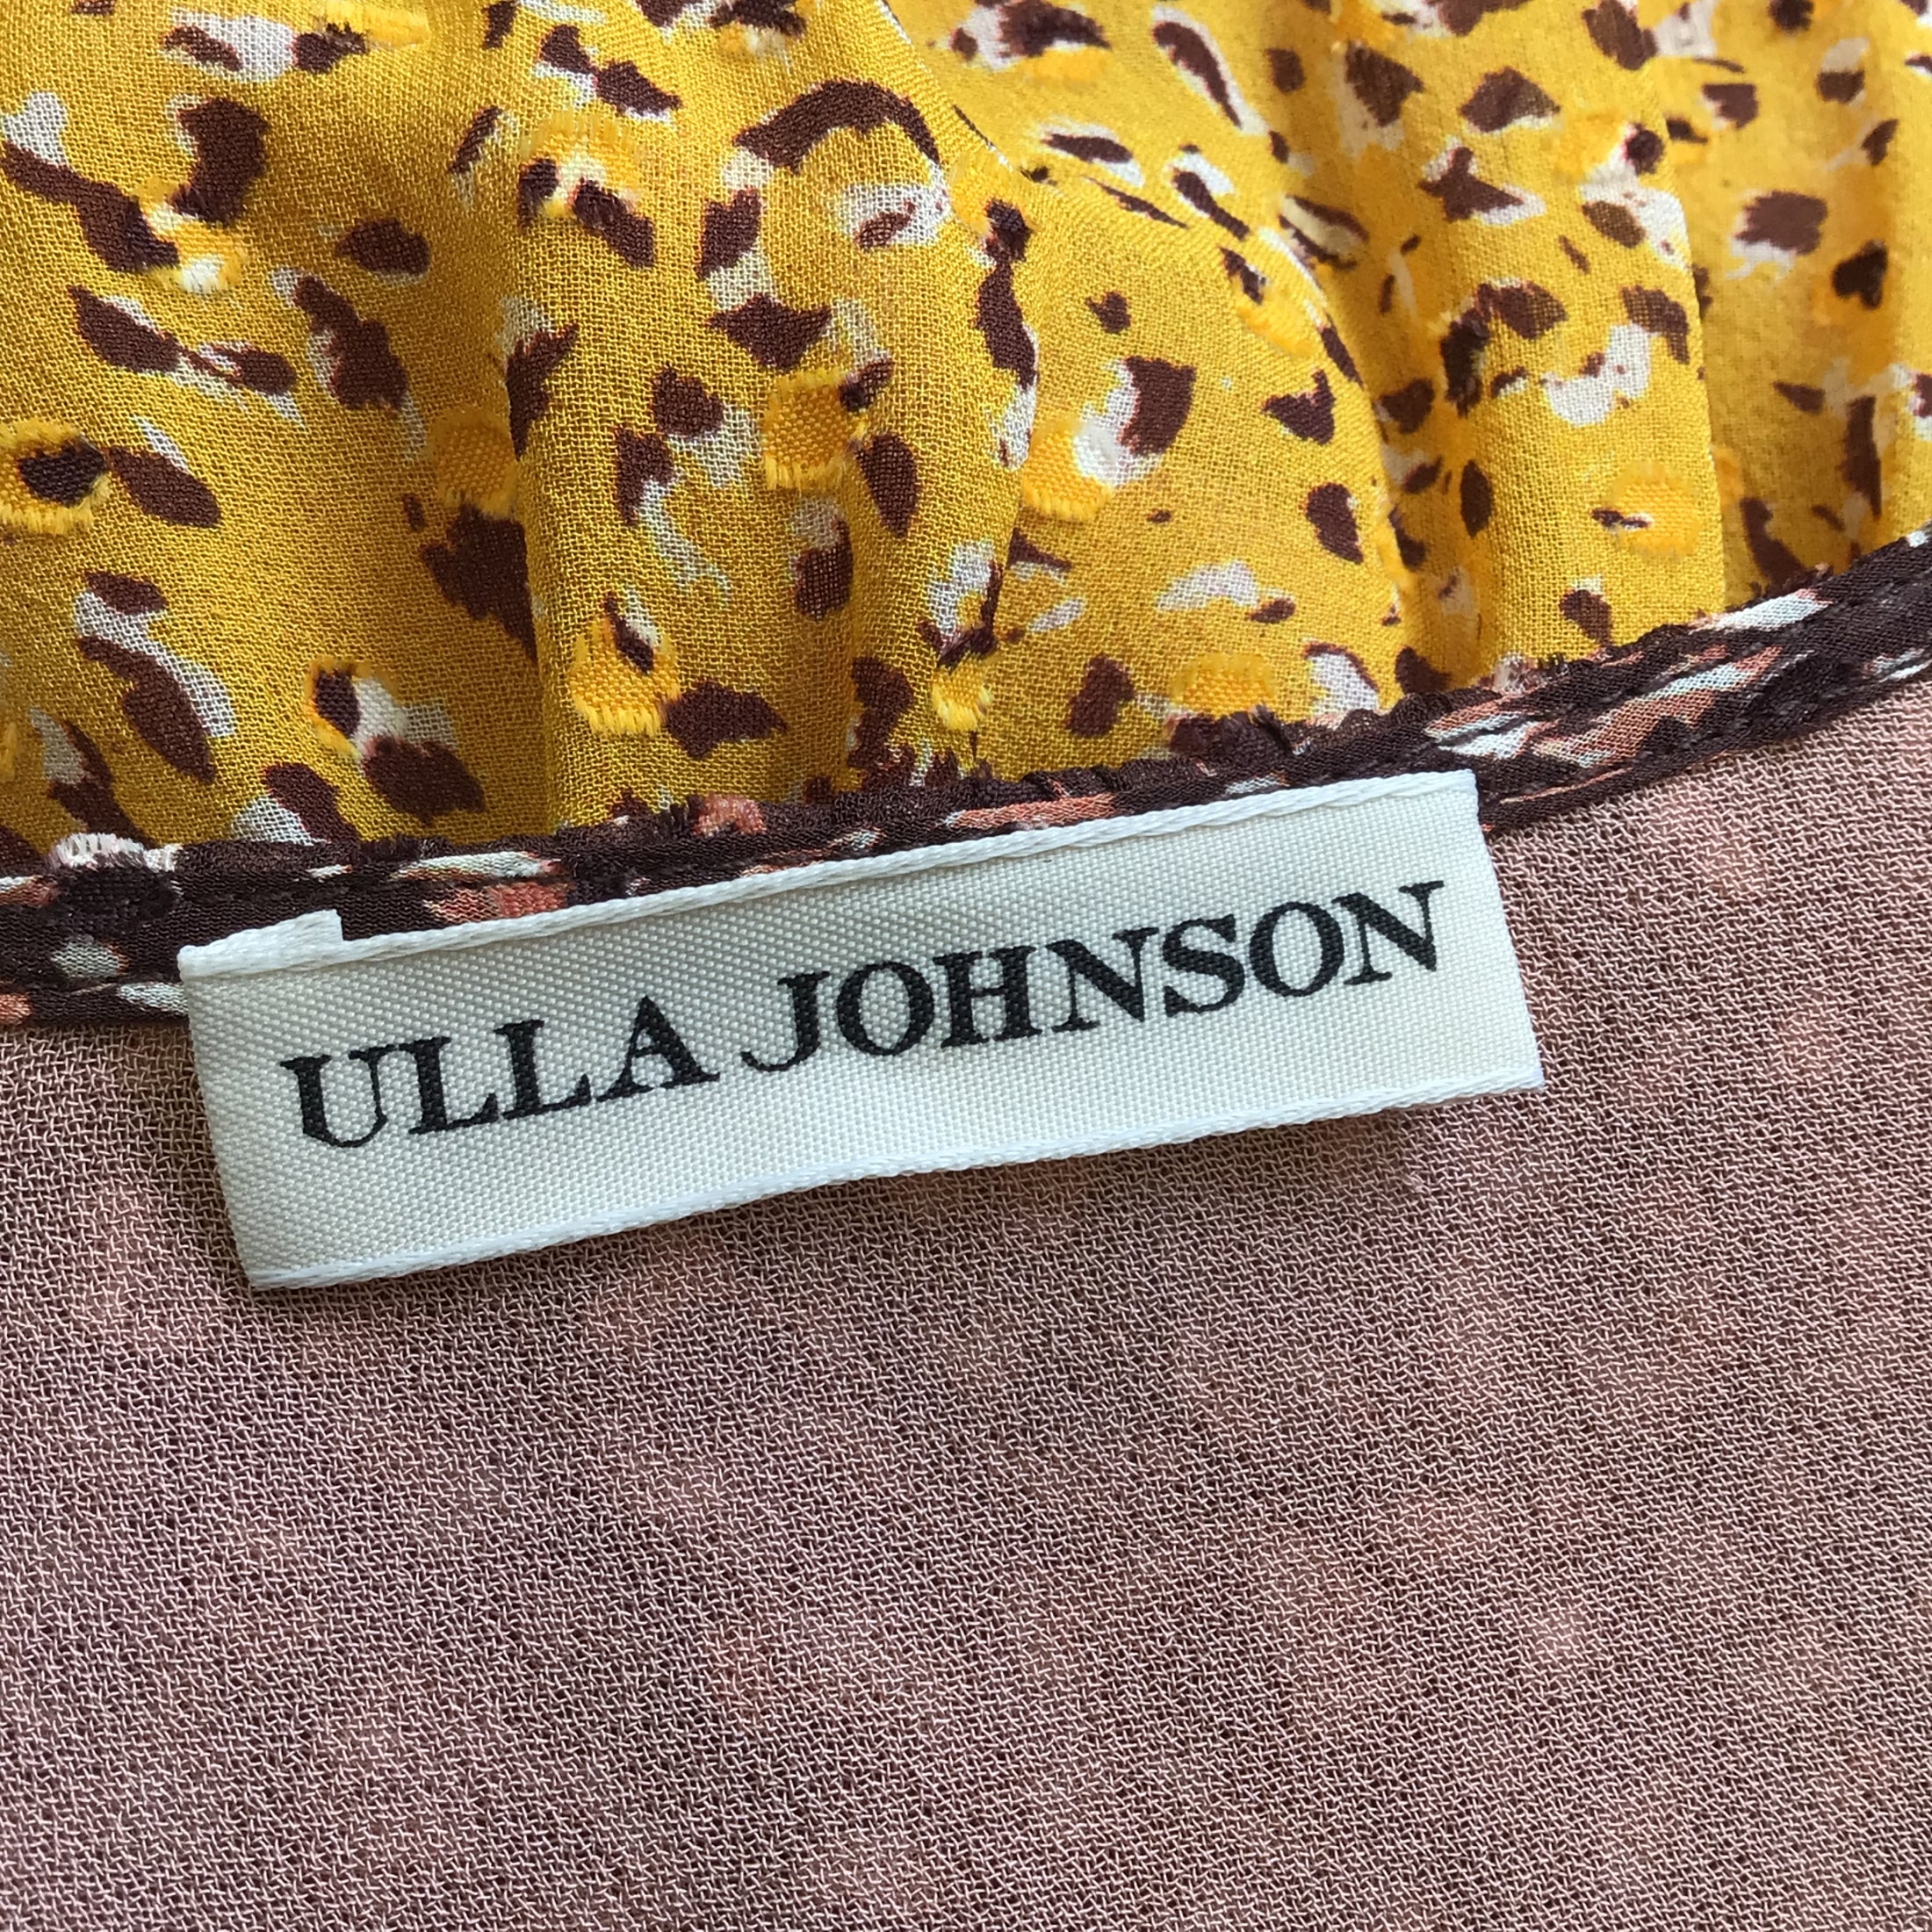 Ulla Johnson Brown / Green / Mustard Yellow Multi Printed Silk Midi Dress